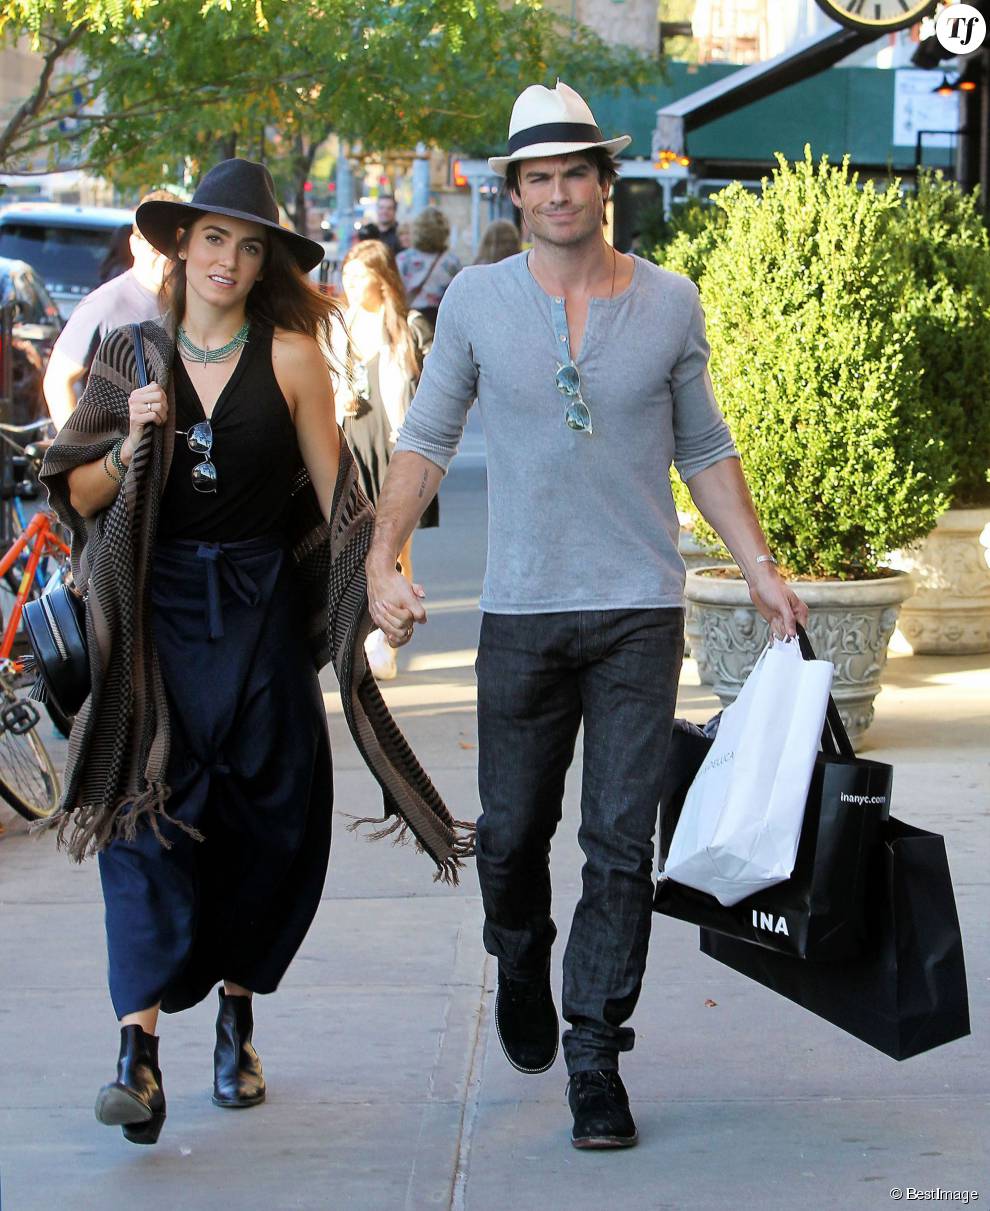  Ian Somerhalder et sa femme Nikki Reed se promènent dans les rues de New York, le 12 octobre 2015  